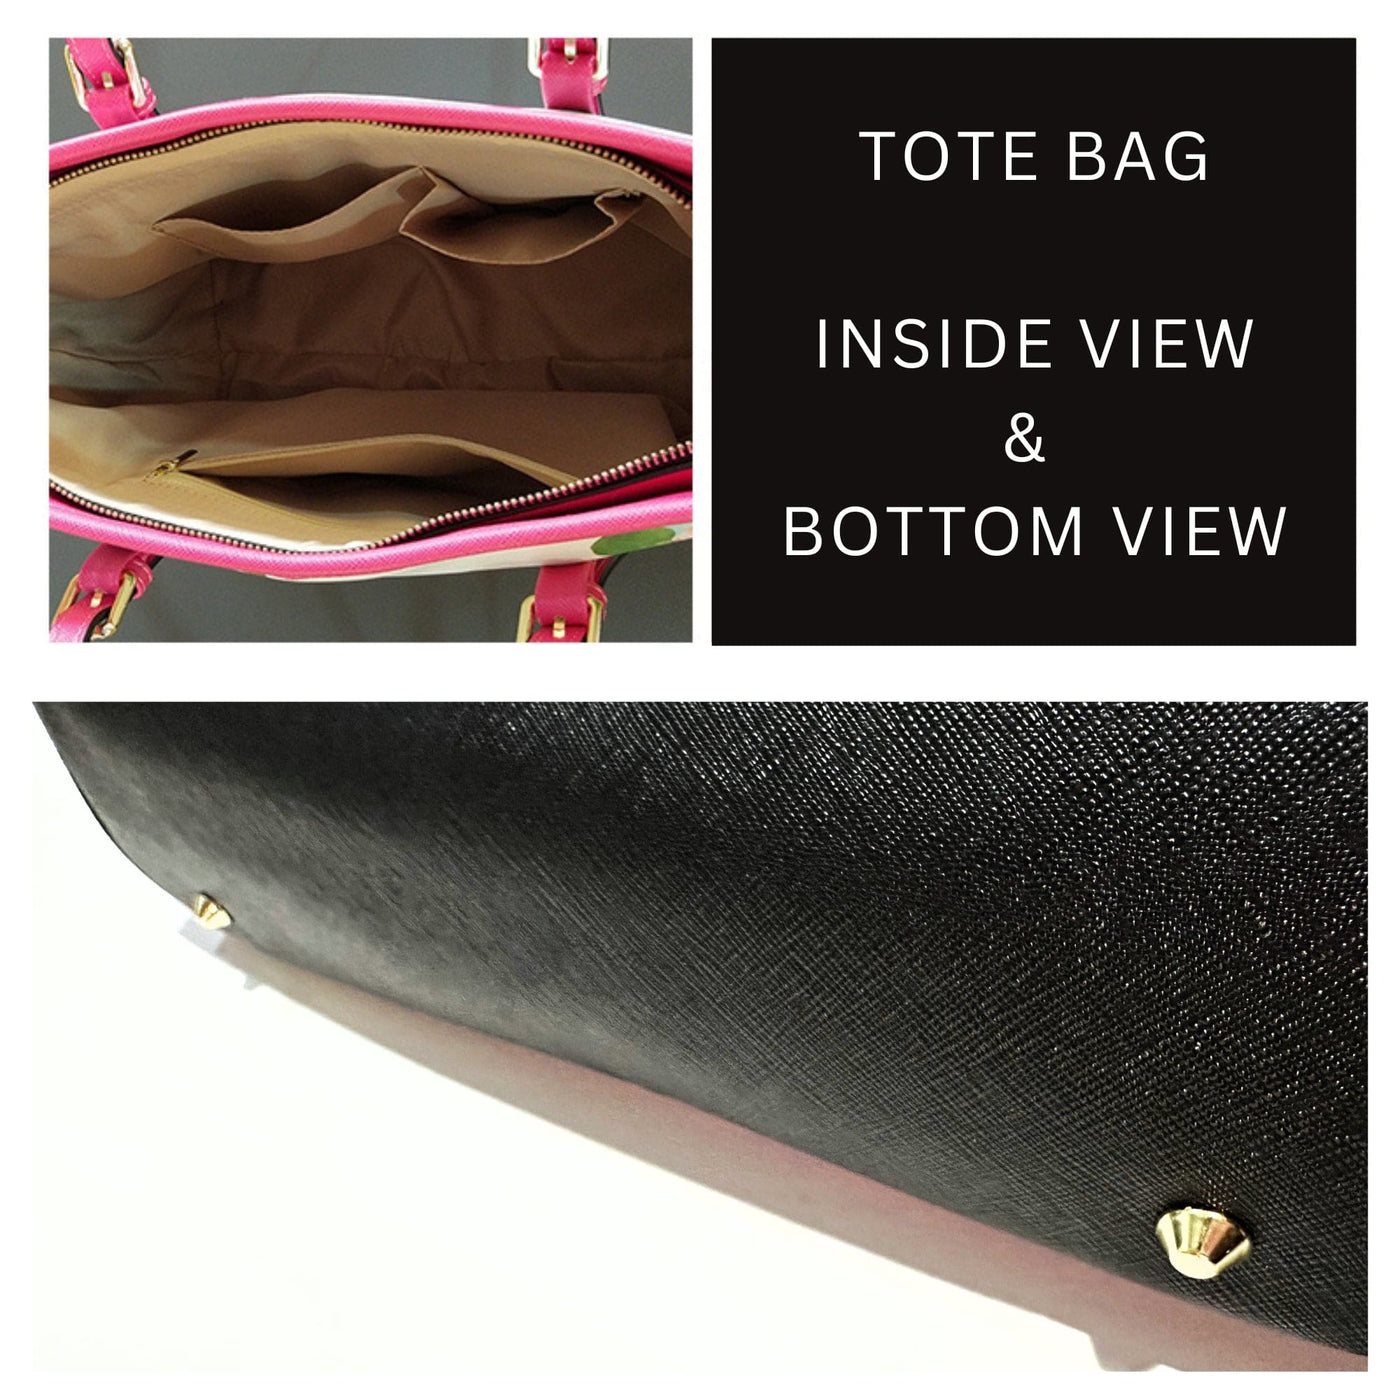 Large Leather Tote Shoulder Bag - Brown Exotic Tiger Pattern B3558250 - Bags |